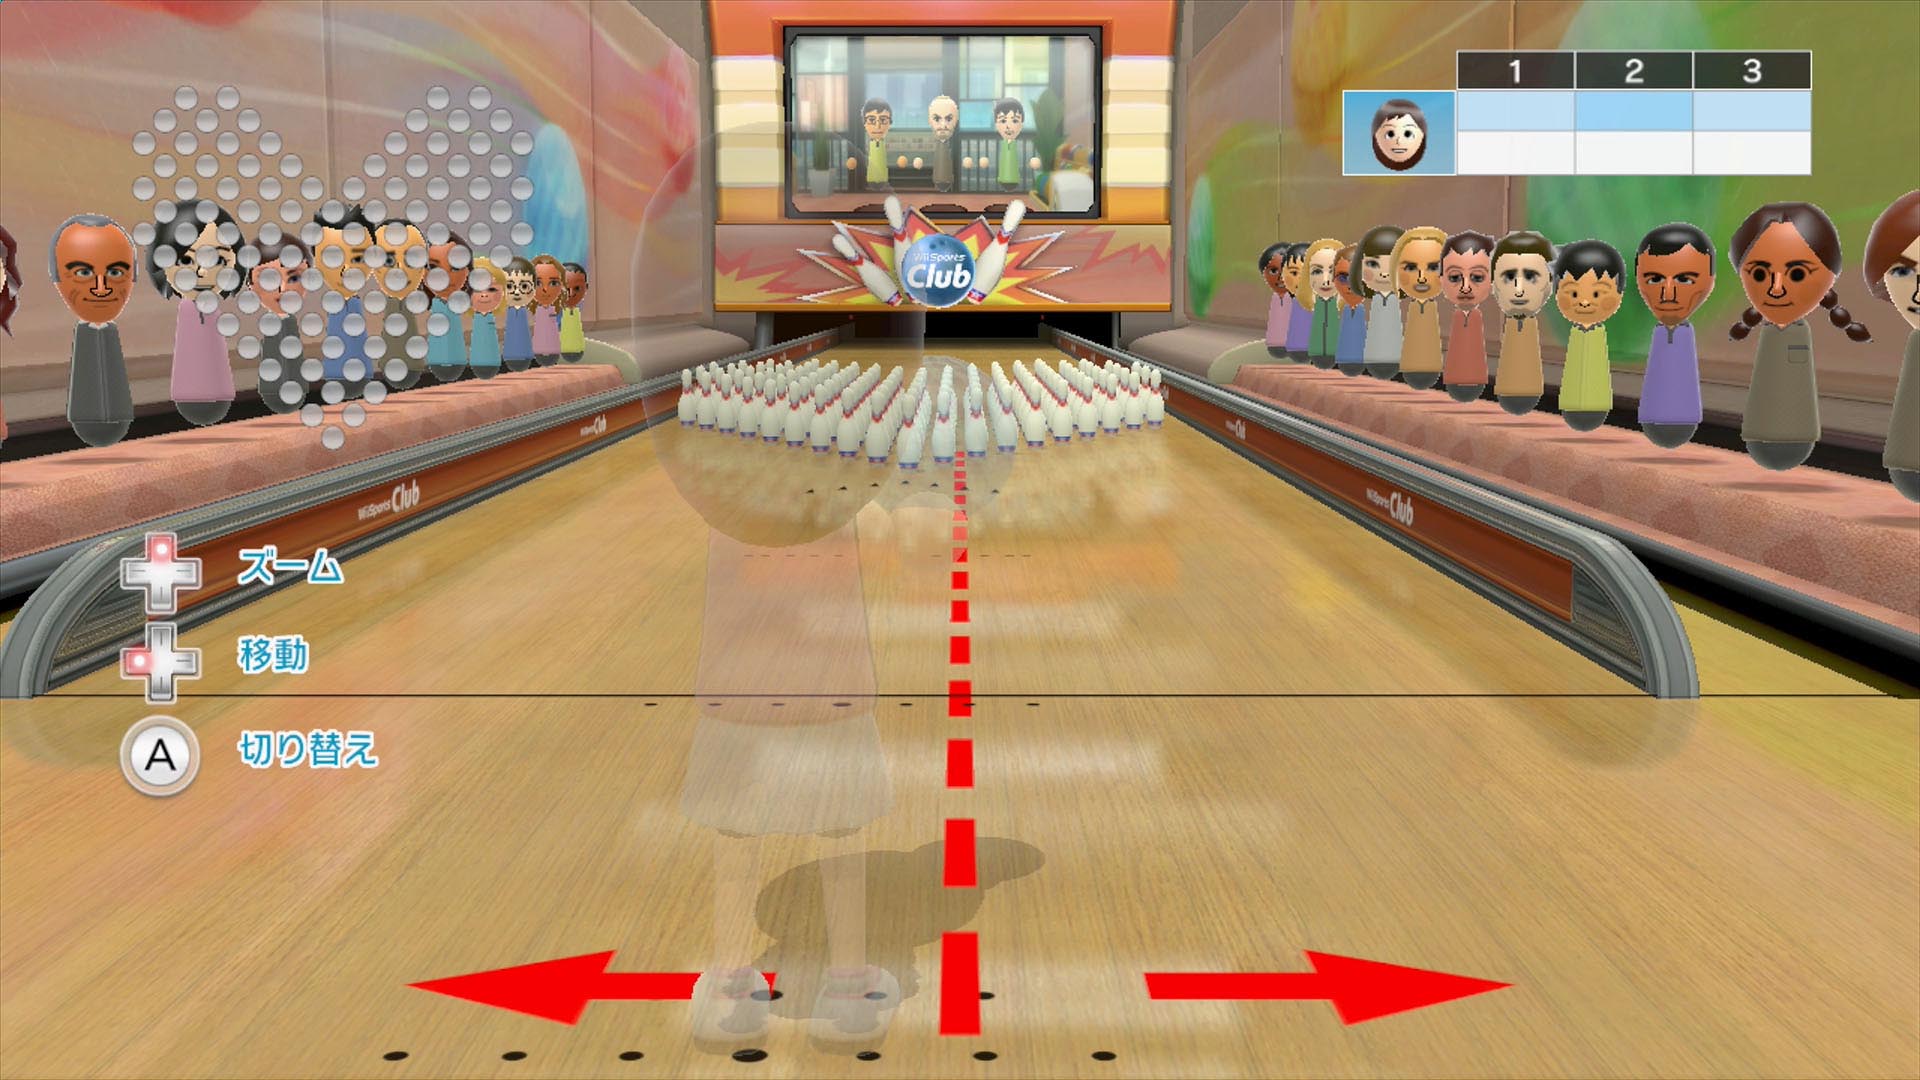 wii sports resort bowling 100 pin game